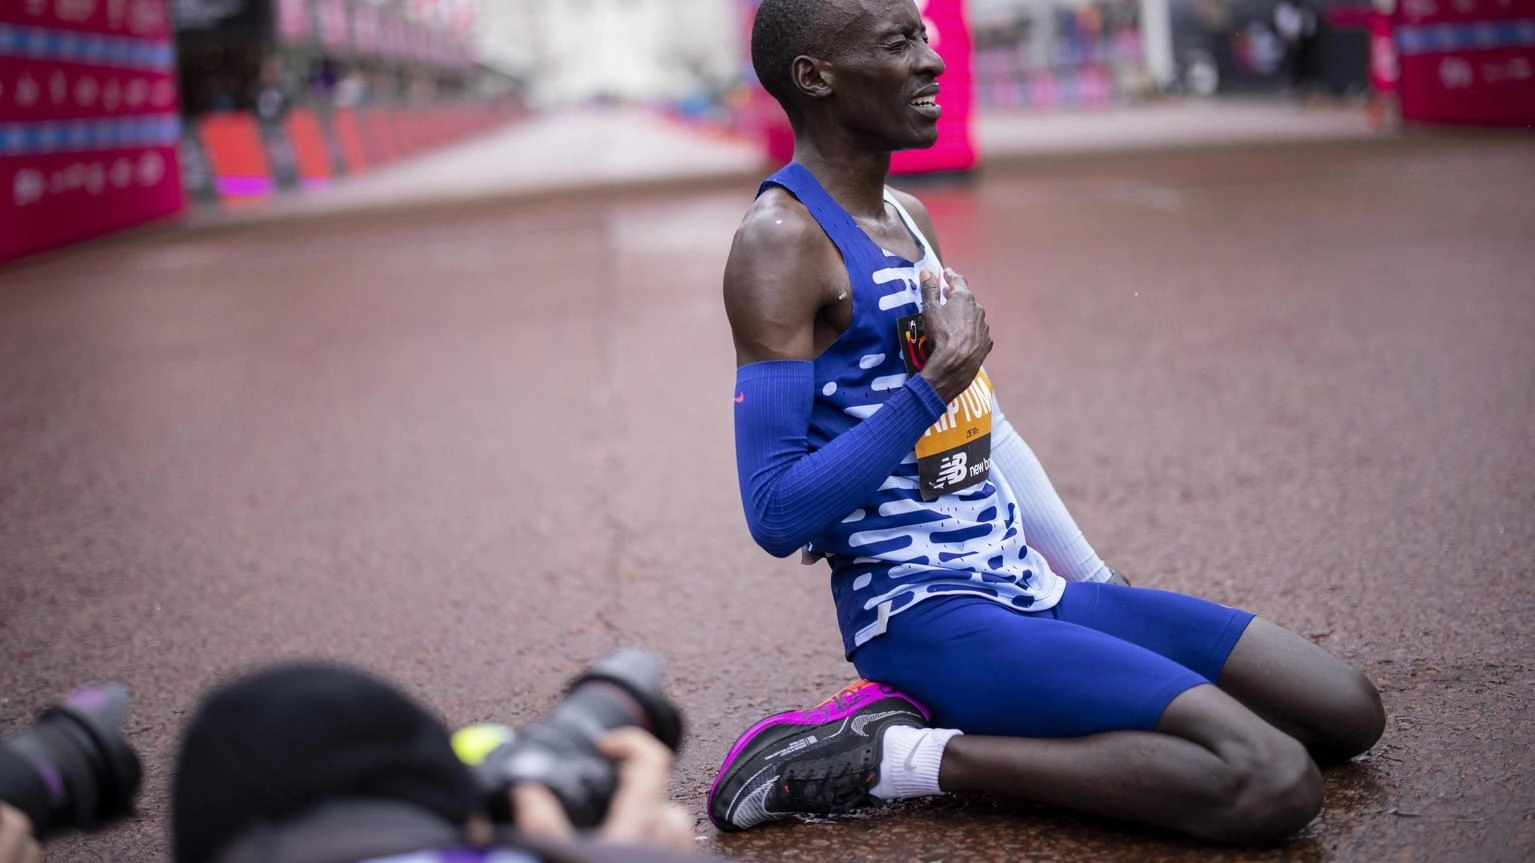 Atletica: Kenya, funerali di Stato per il maratoneta Kiptum